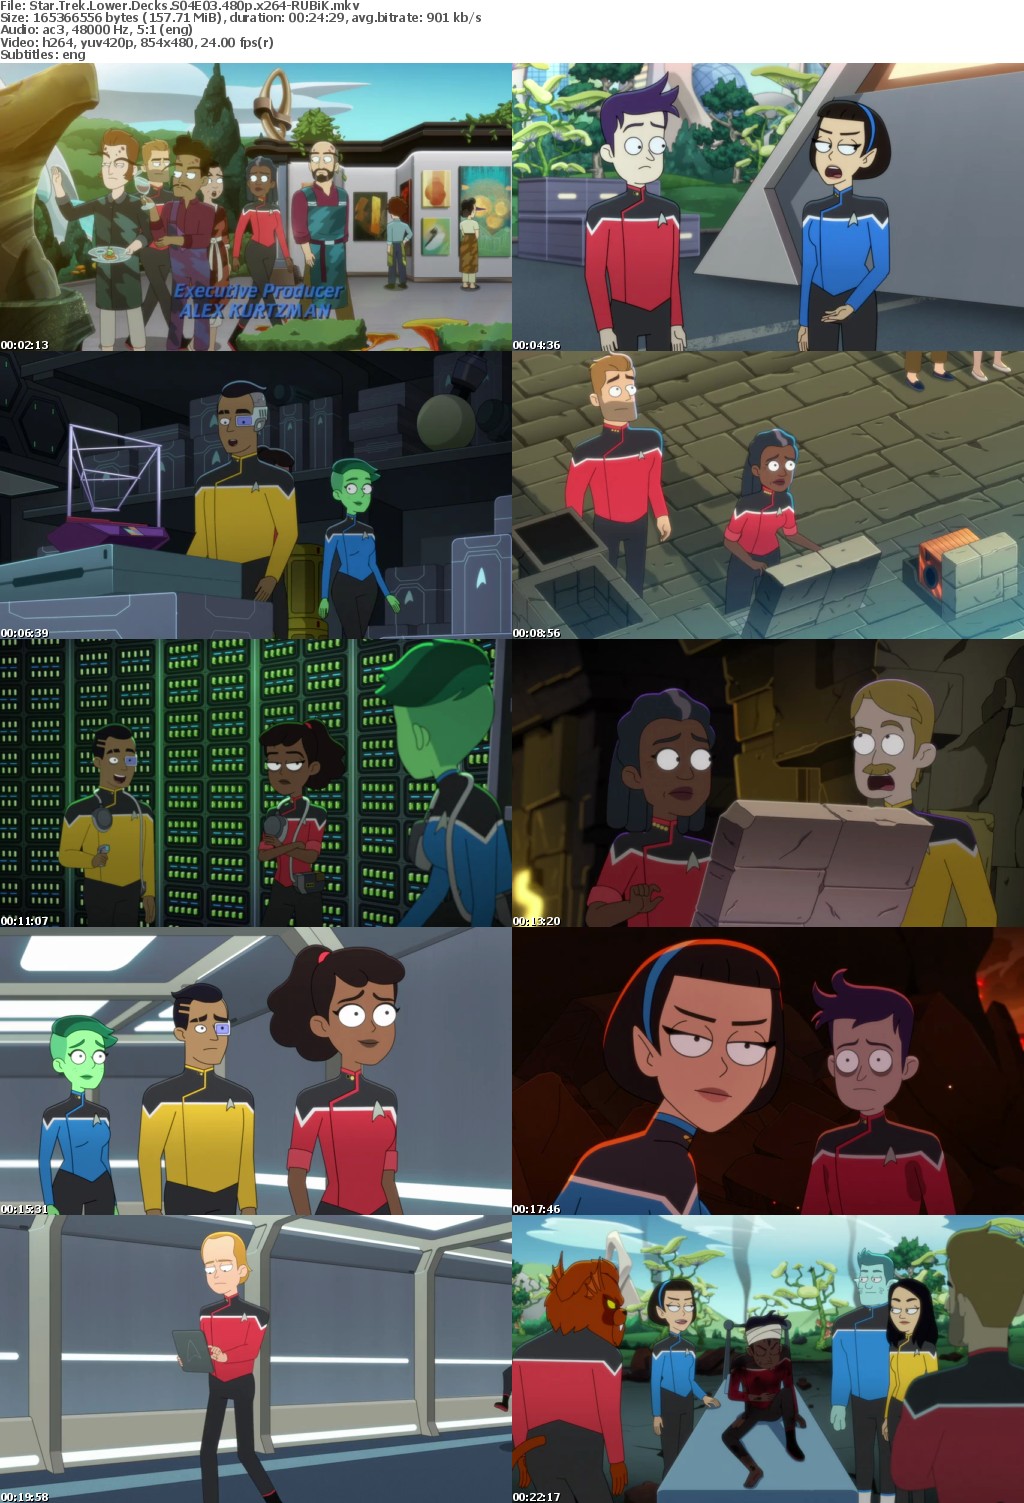 Star Trek Lower Decks S04E03 480p x264-RUBiK Saturn5